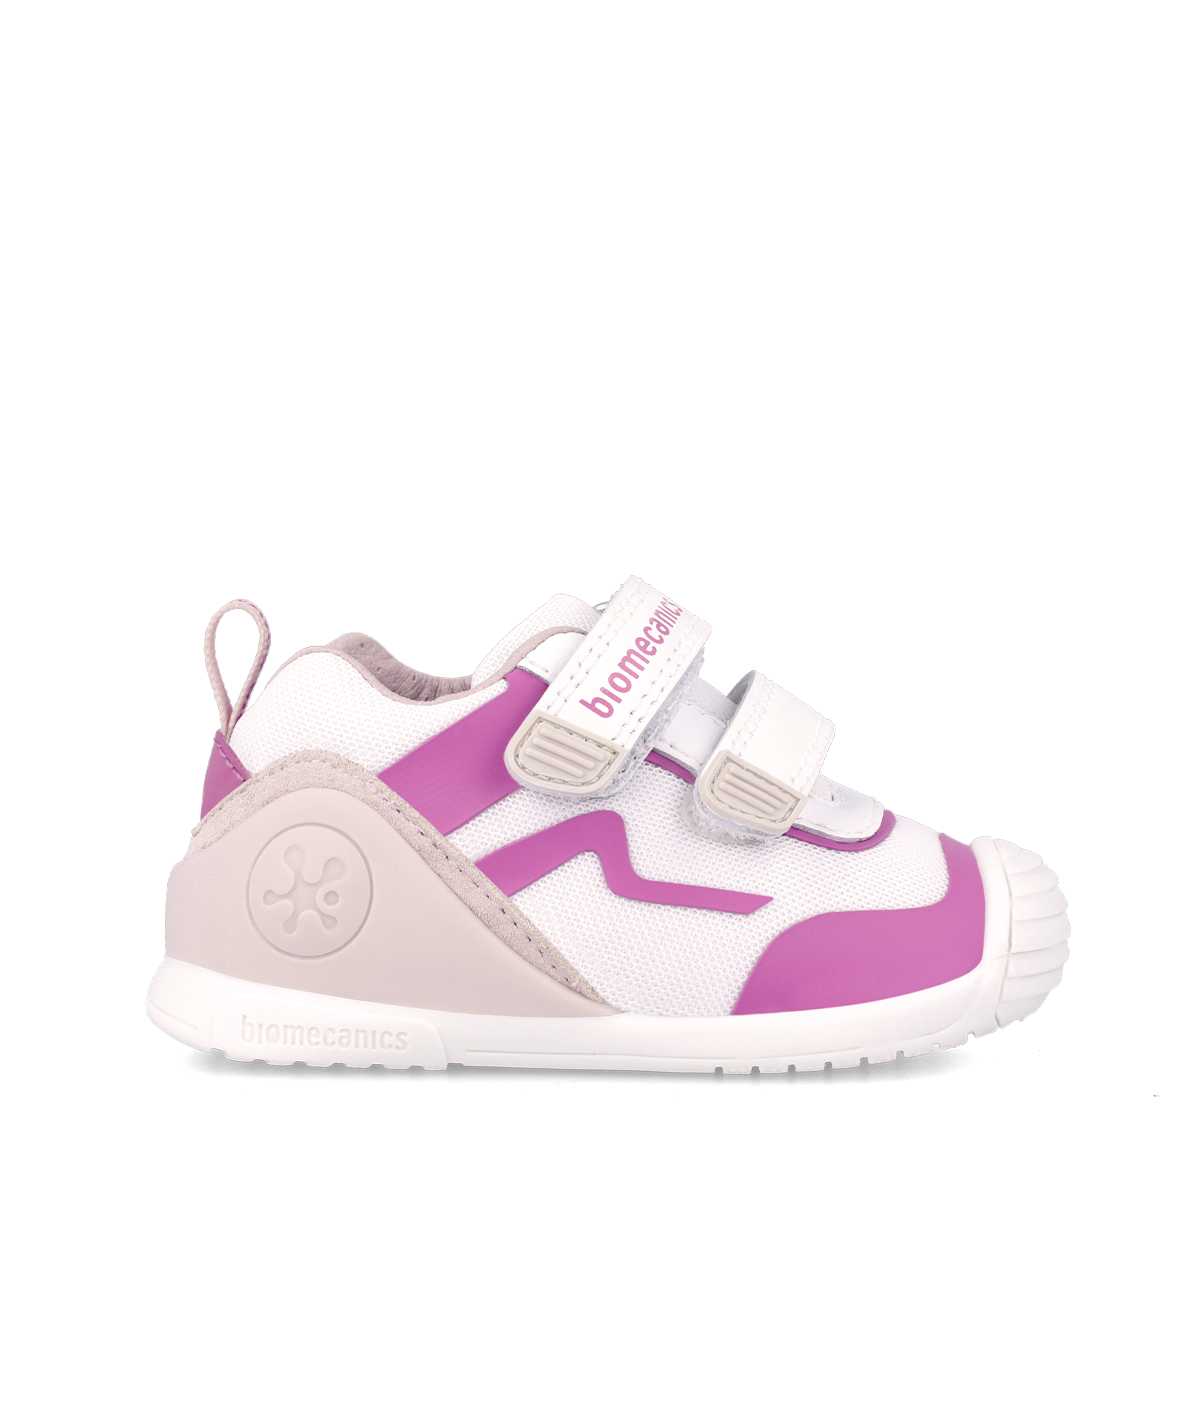 Sneakers haut blanc et rose